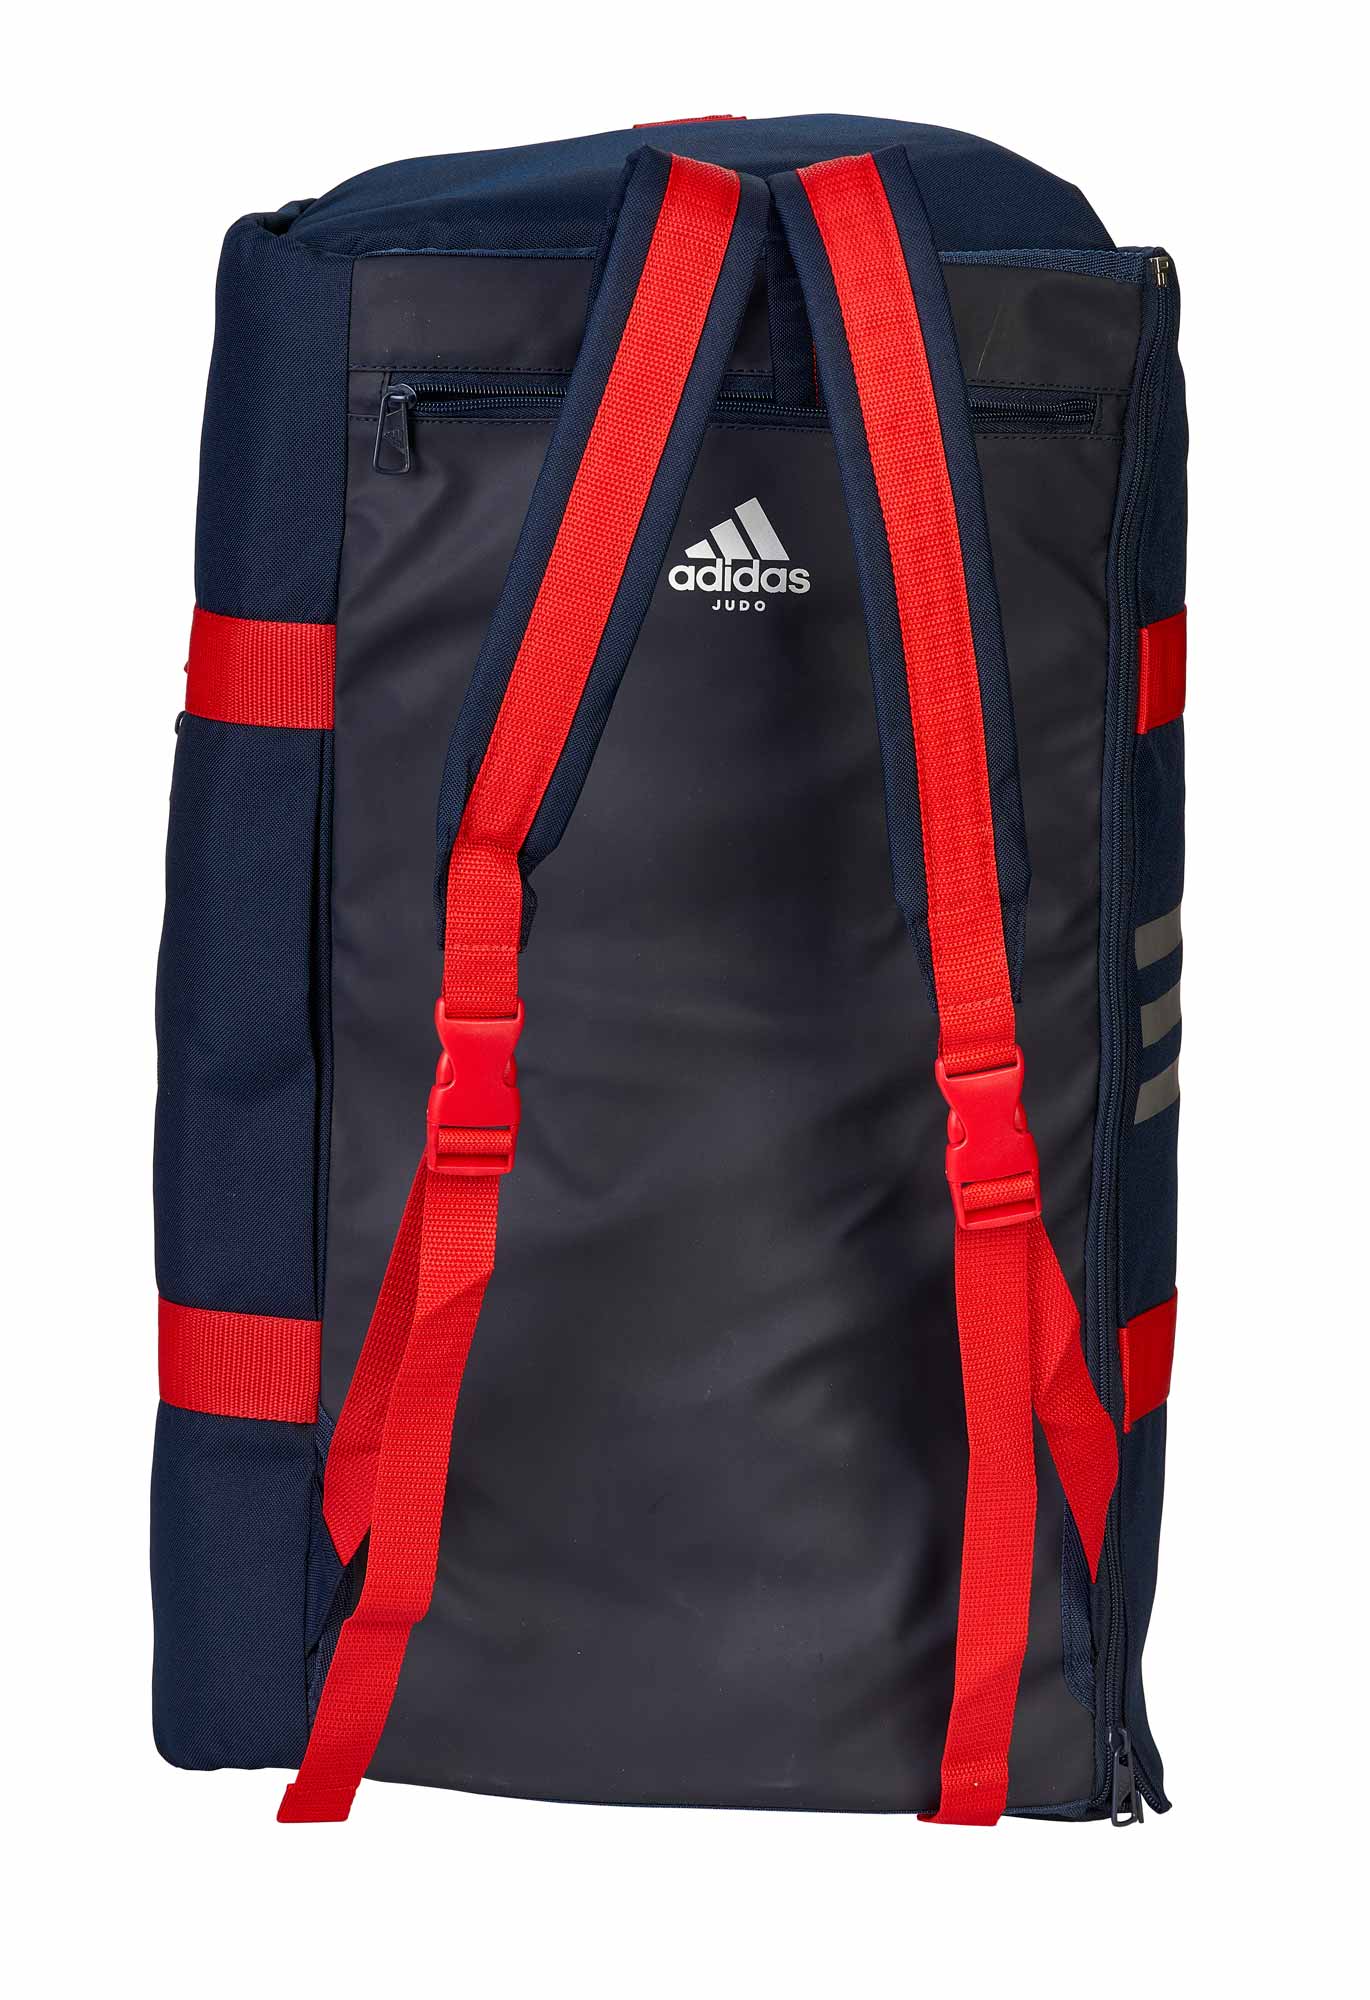 adidas 2in1 Bag Judo navy blue/red M, ADIACC200J